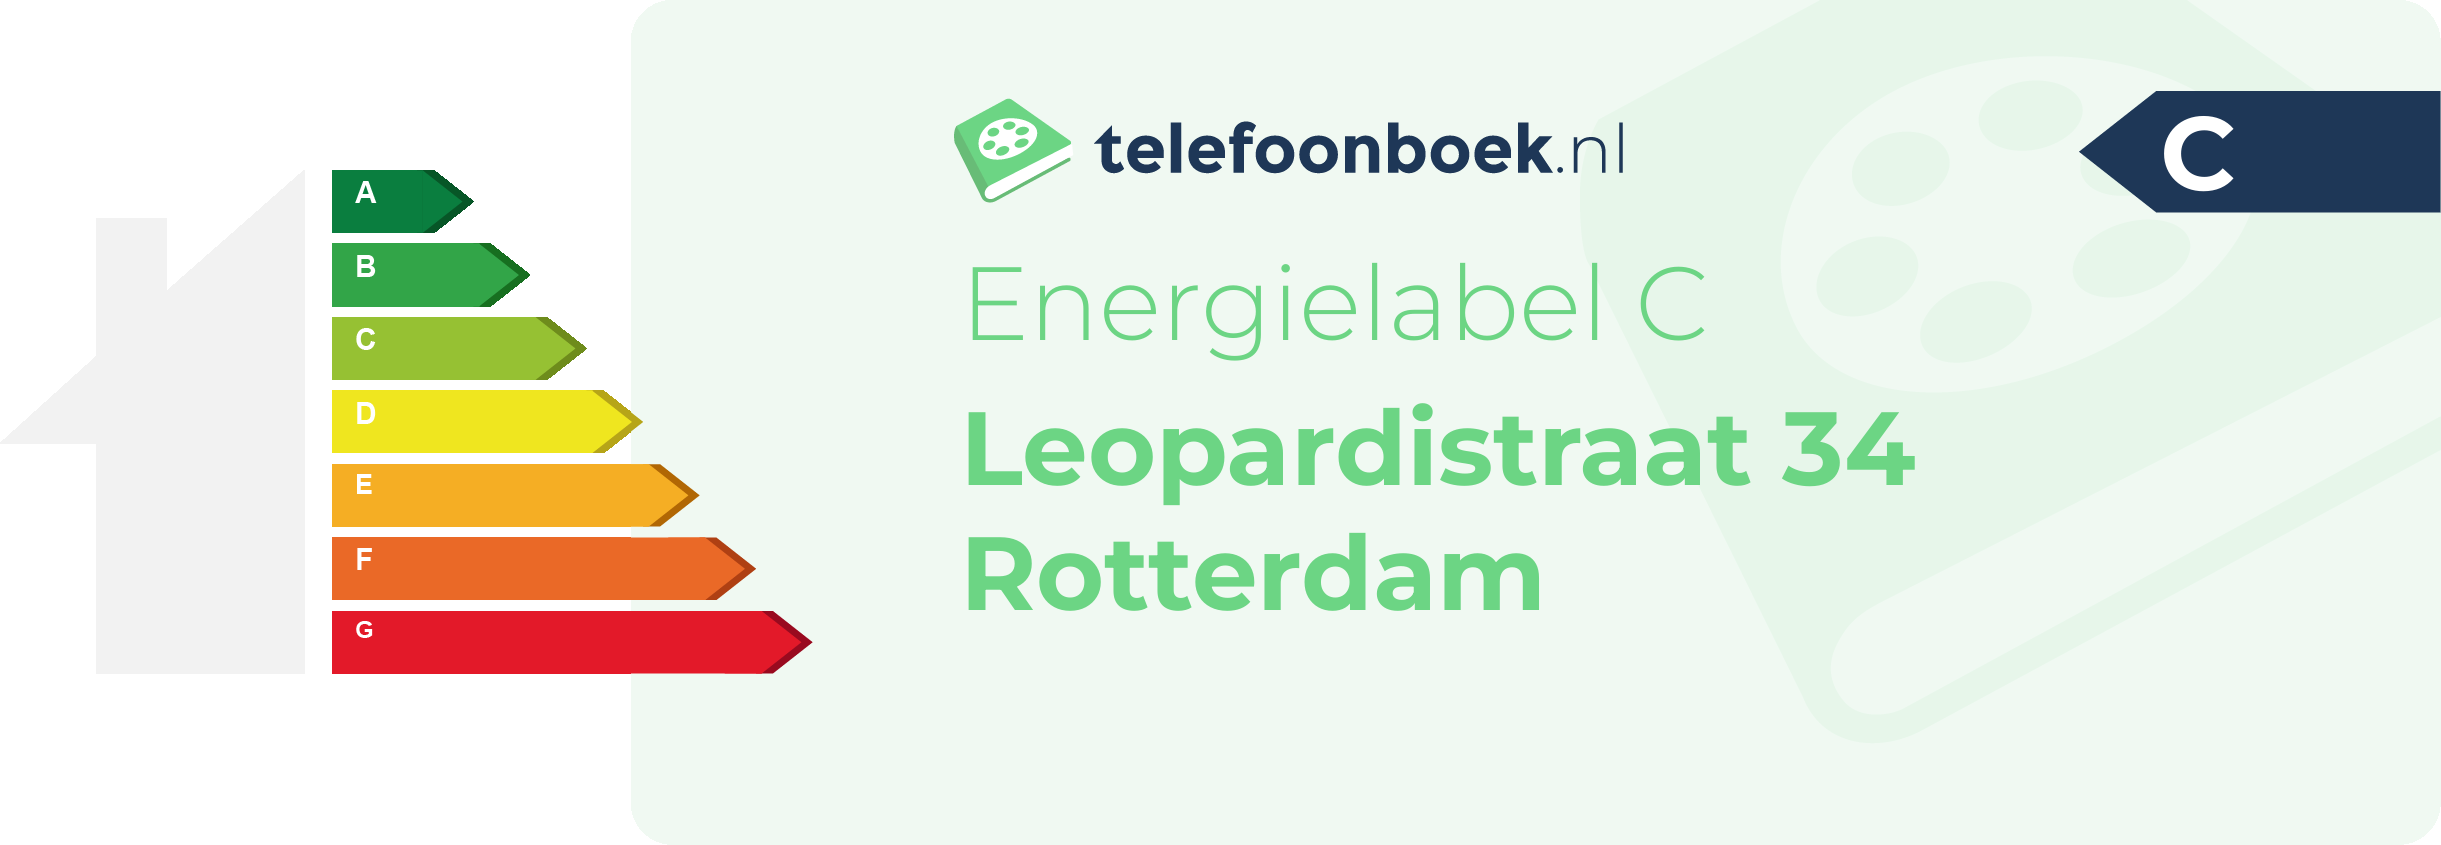 Energielabel Leopardistraat 34 Rotterdam